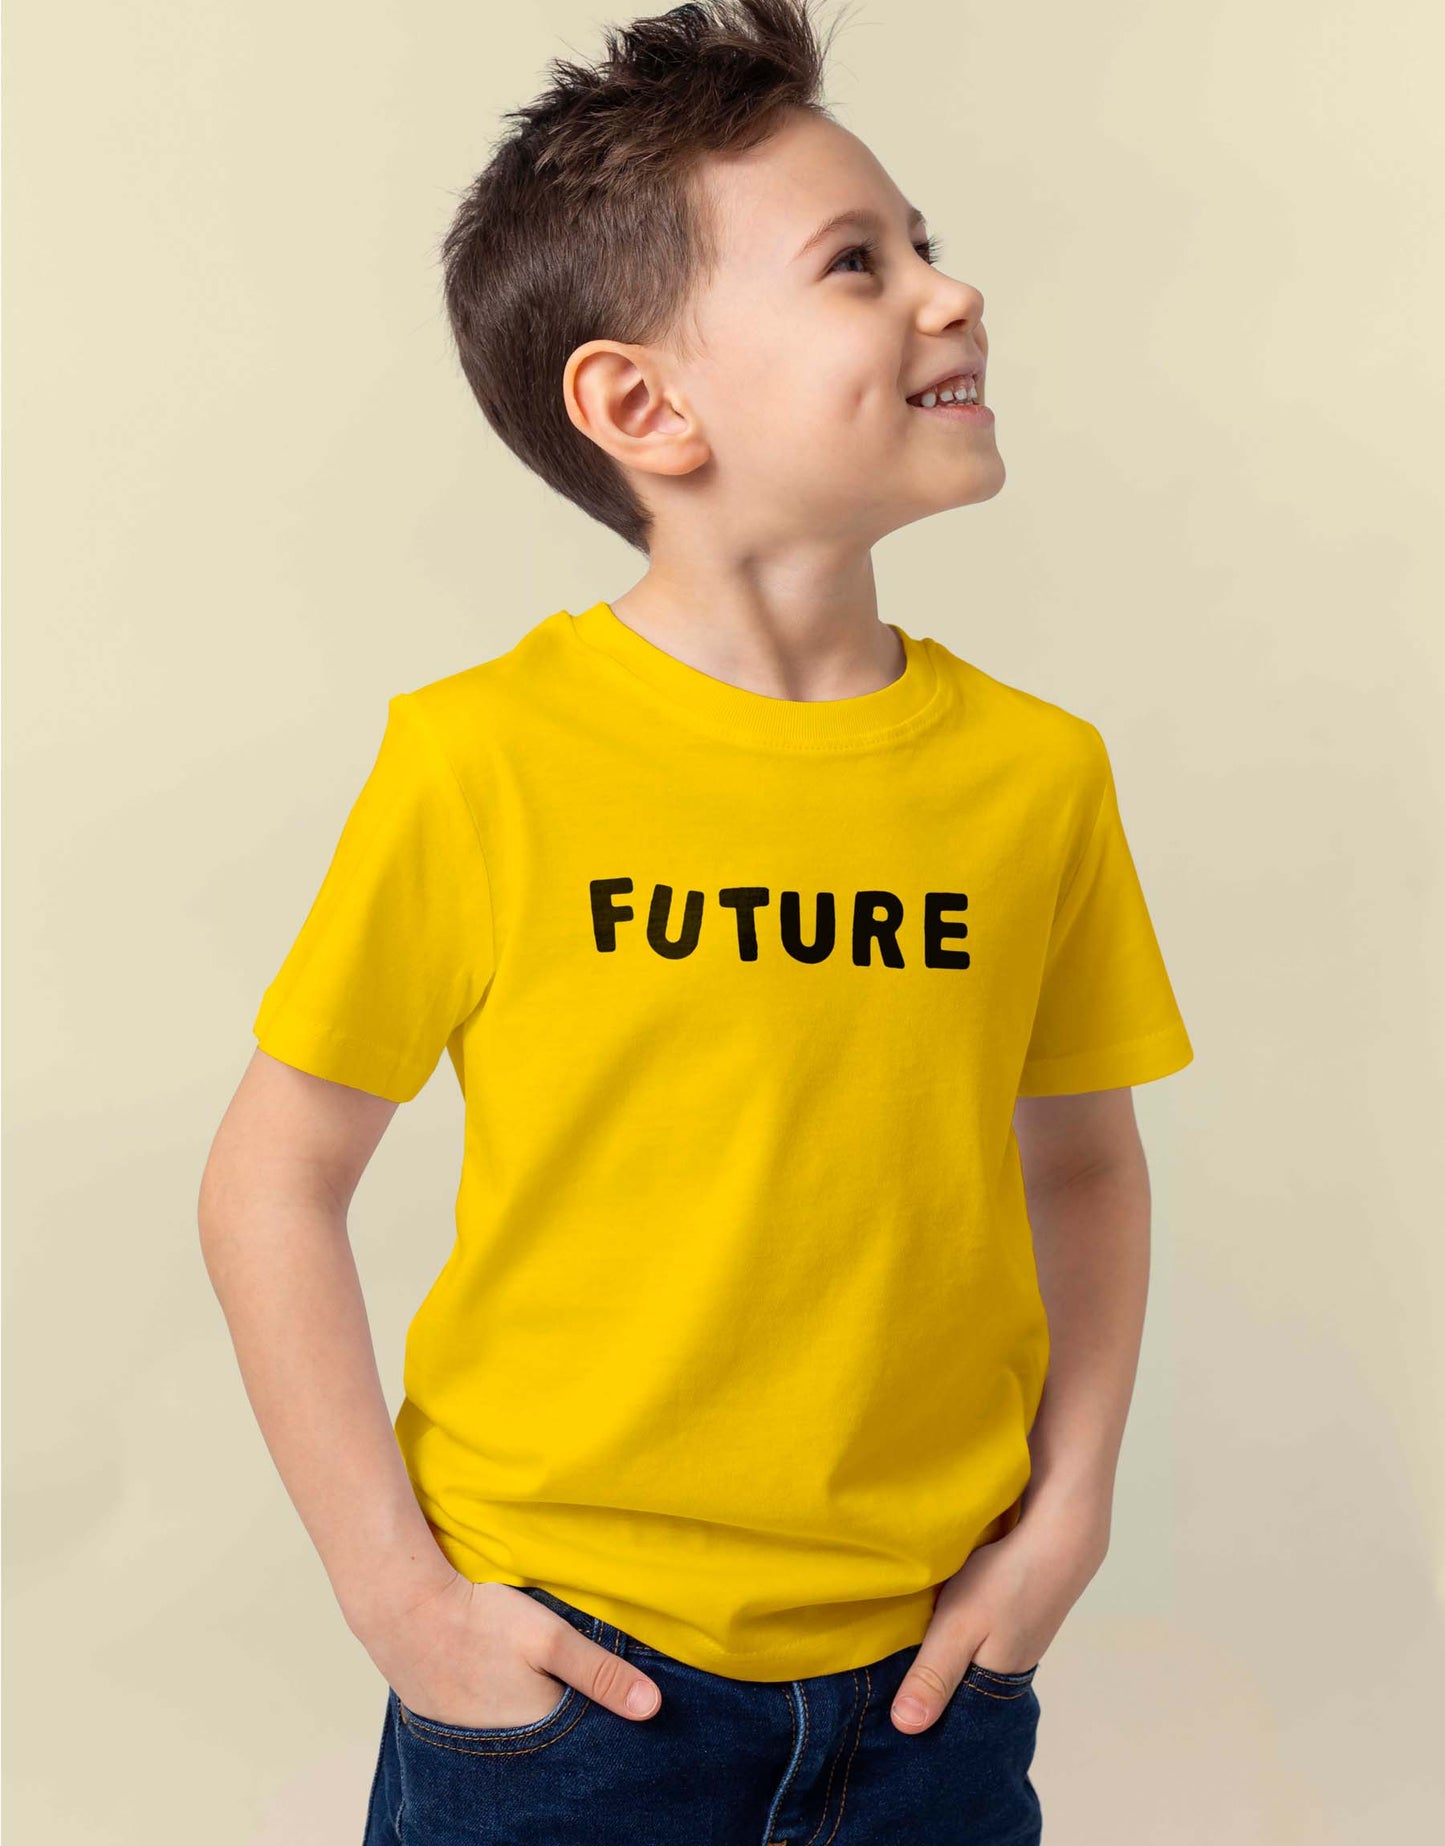 Future - Kids Unisex Printed T-Shirt